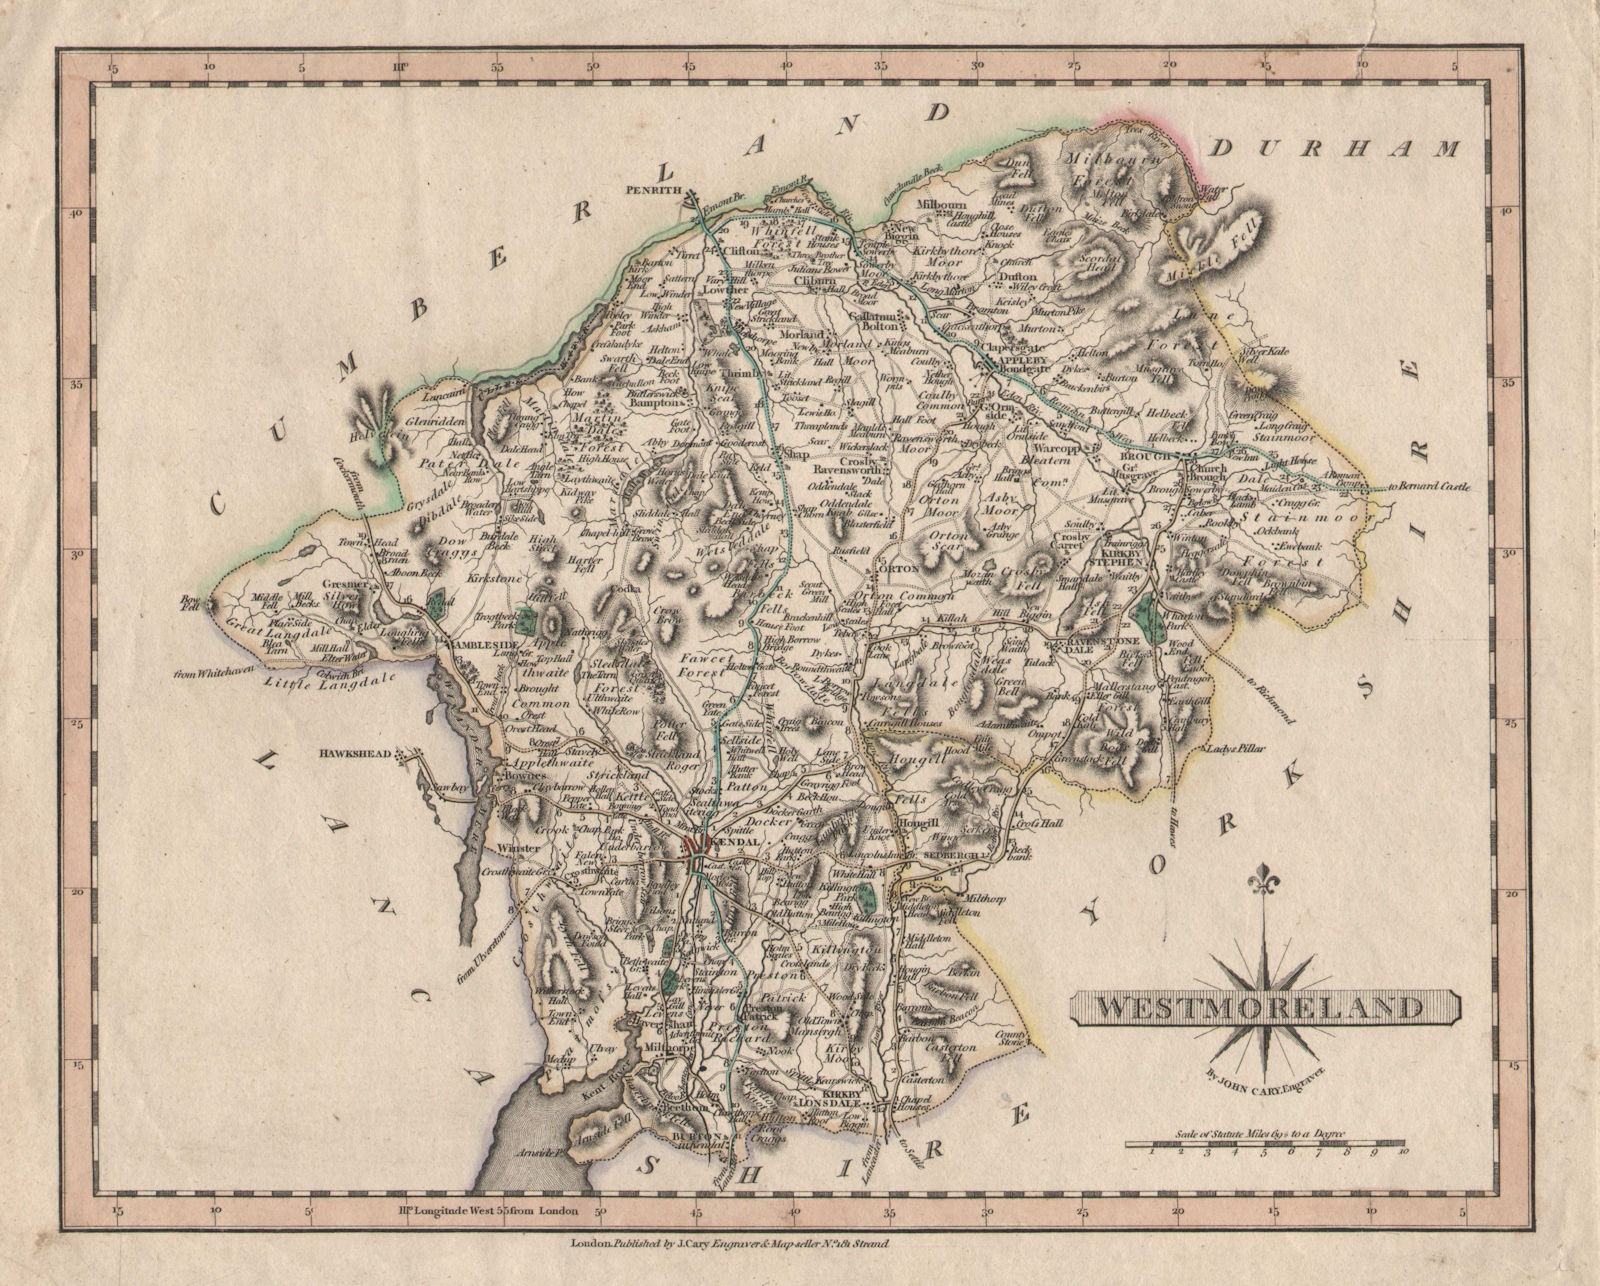 Antique county map of WESTMORELAND by JOHN CARY. Original outline colour c1787